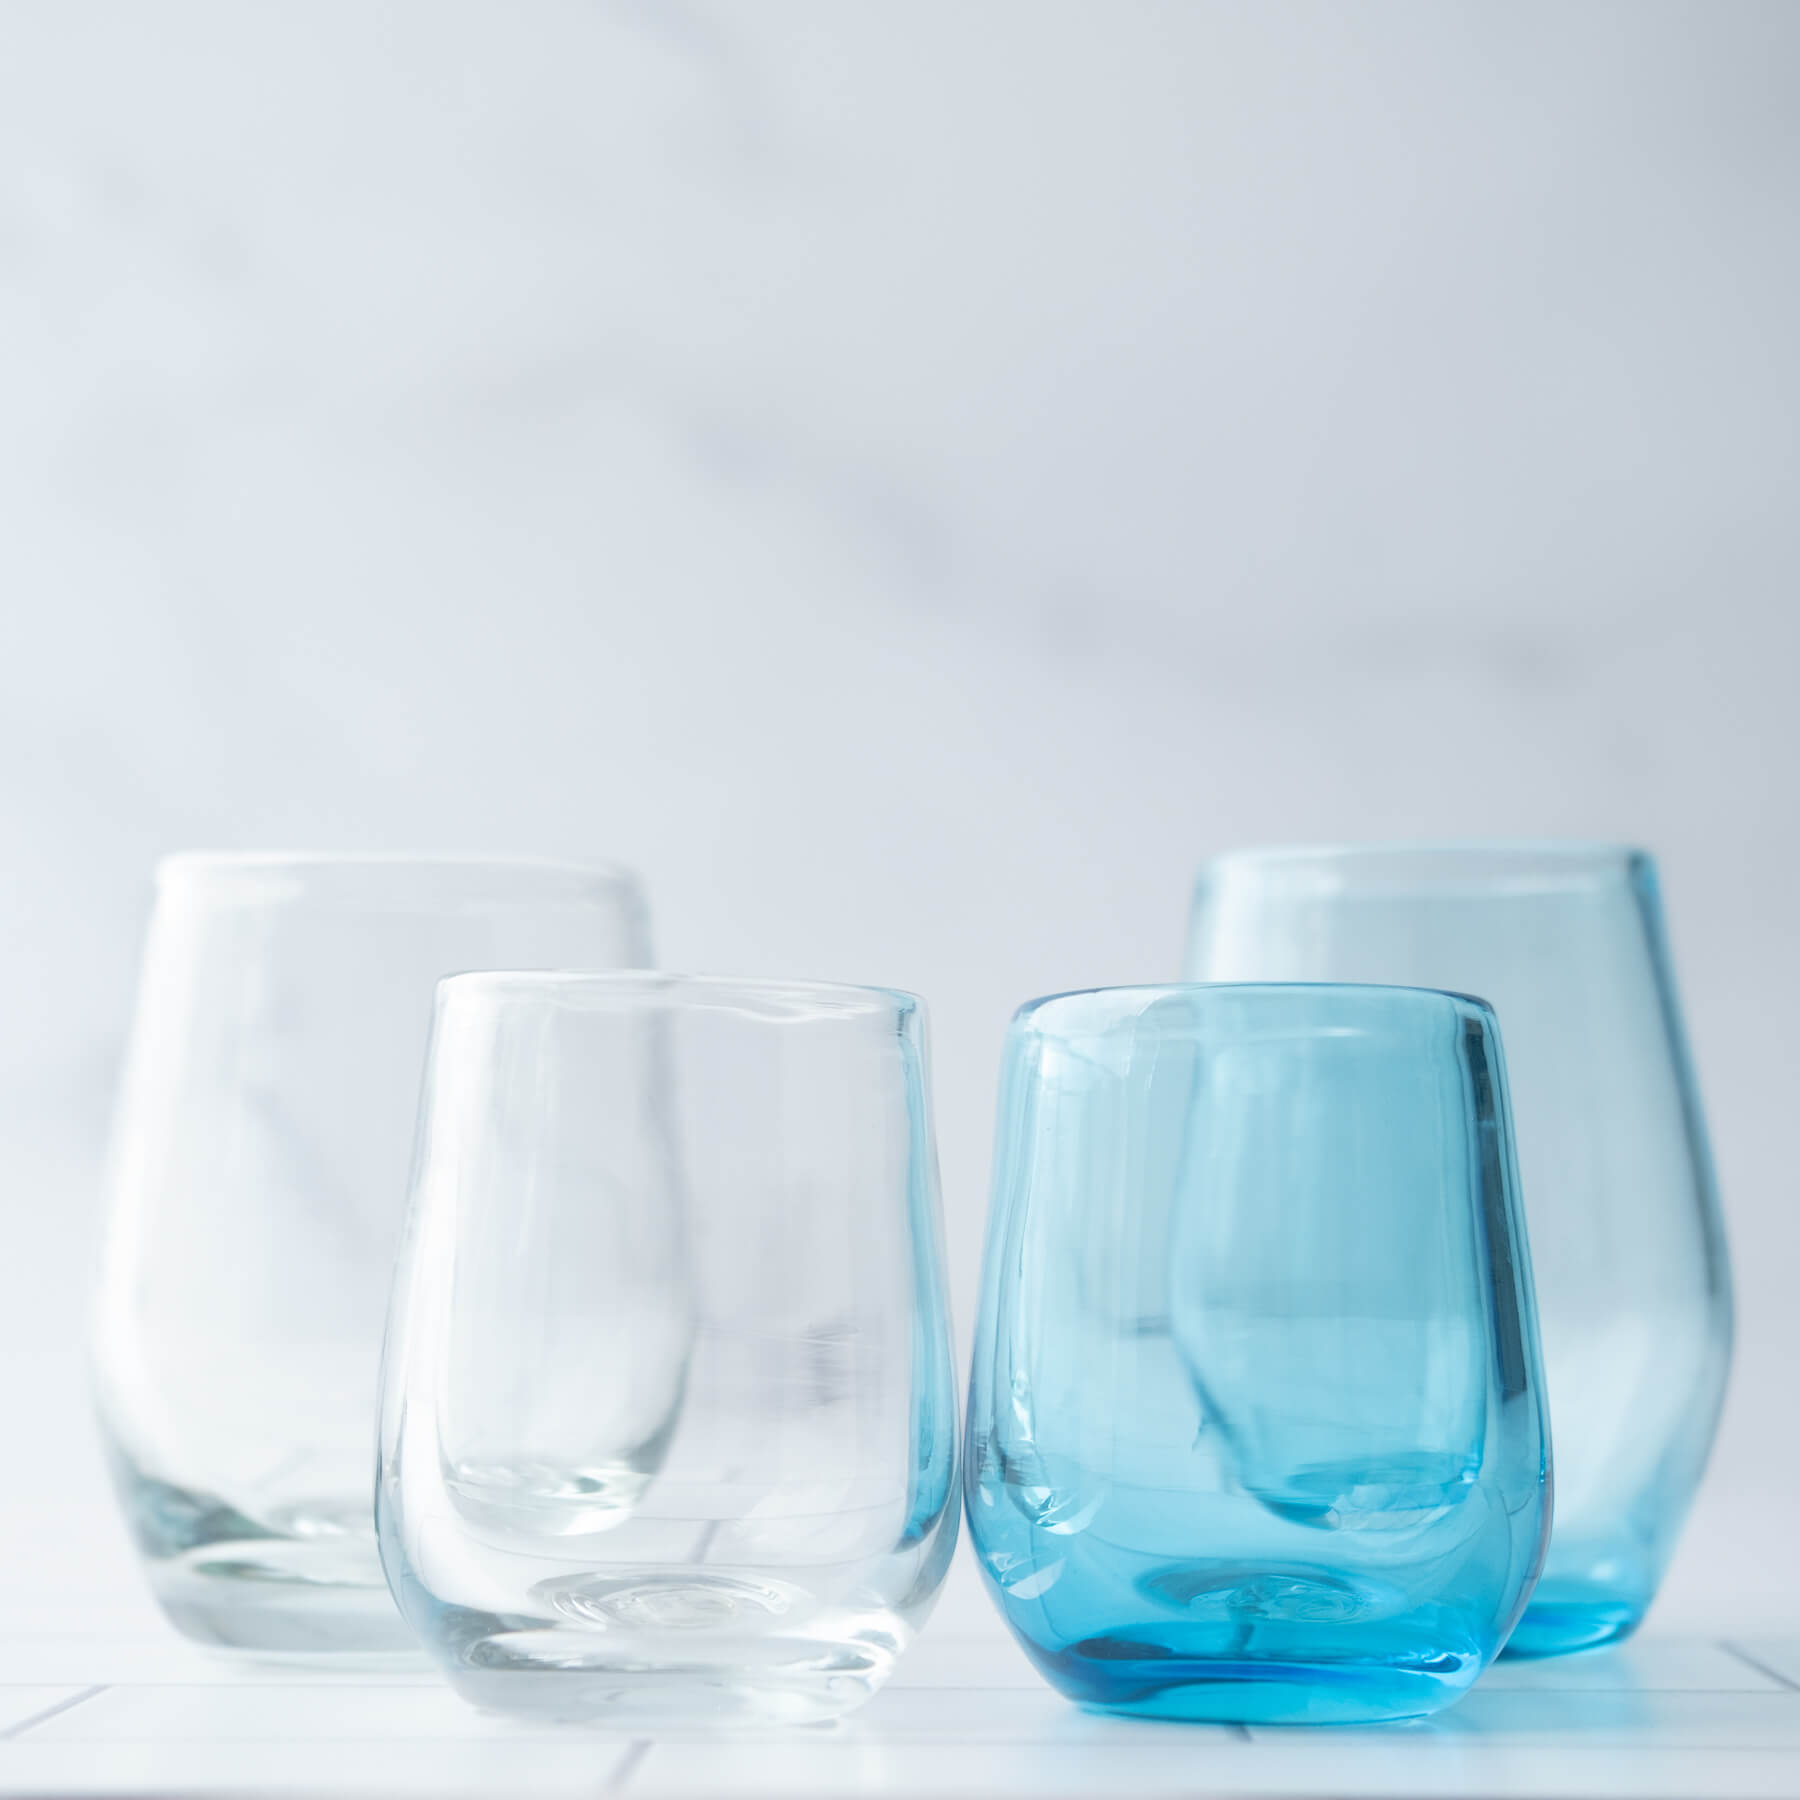 1922 Small Stemless Wine Glass - Ice Blue